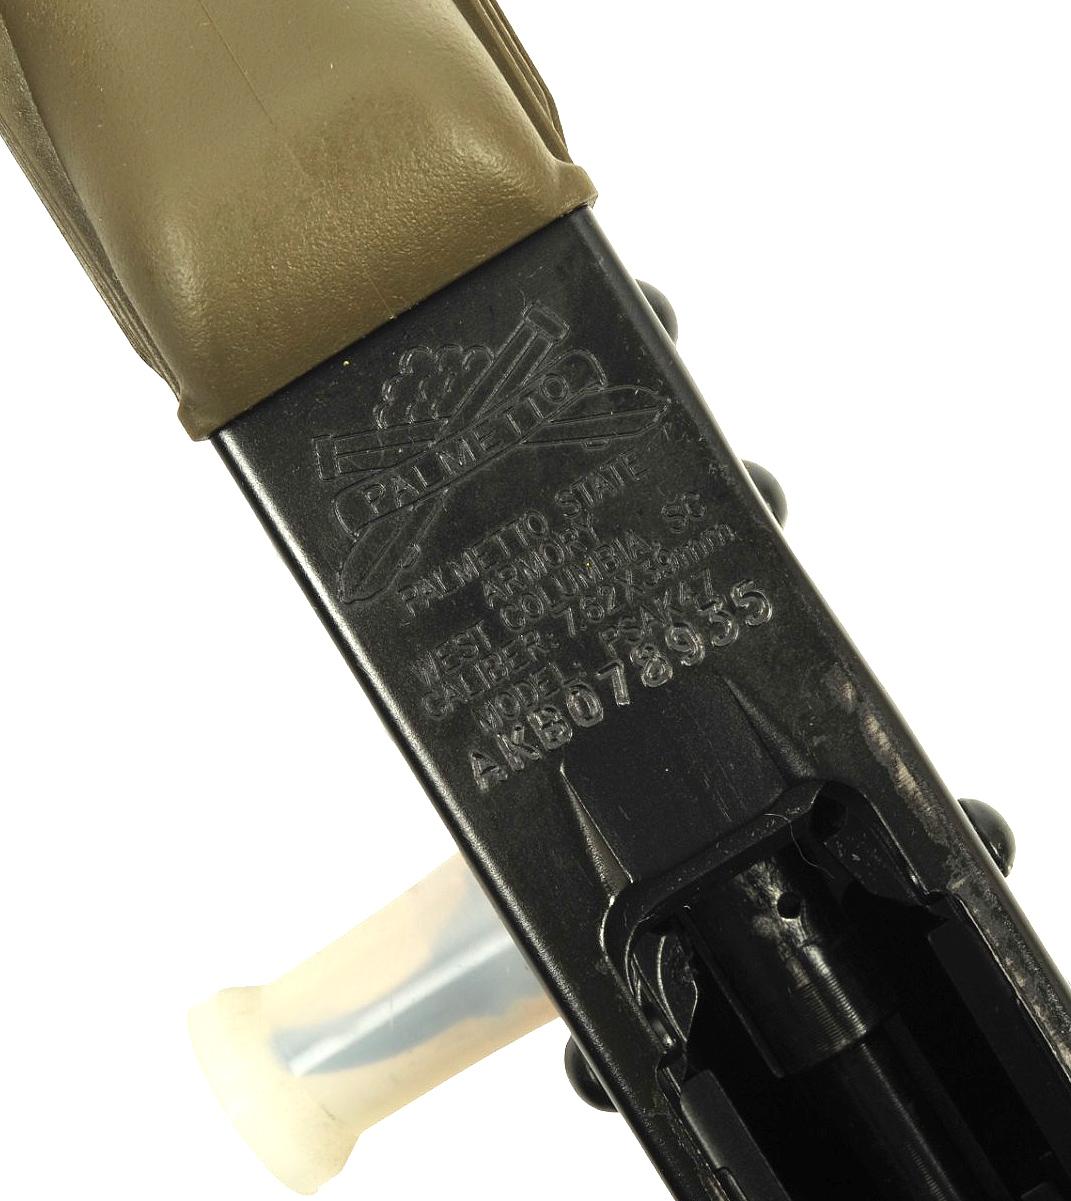 Palmetto State Armory PSAK47 7.62X39MM Semi-auto Rifle FFL Required: AKB072935 (EDN1)